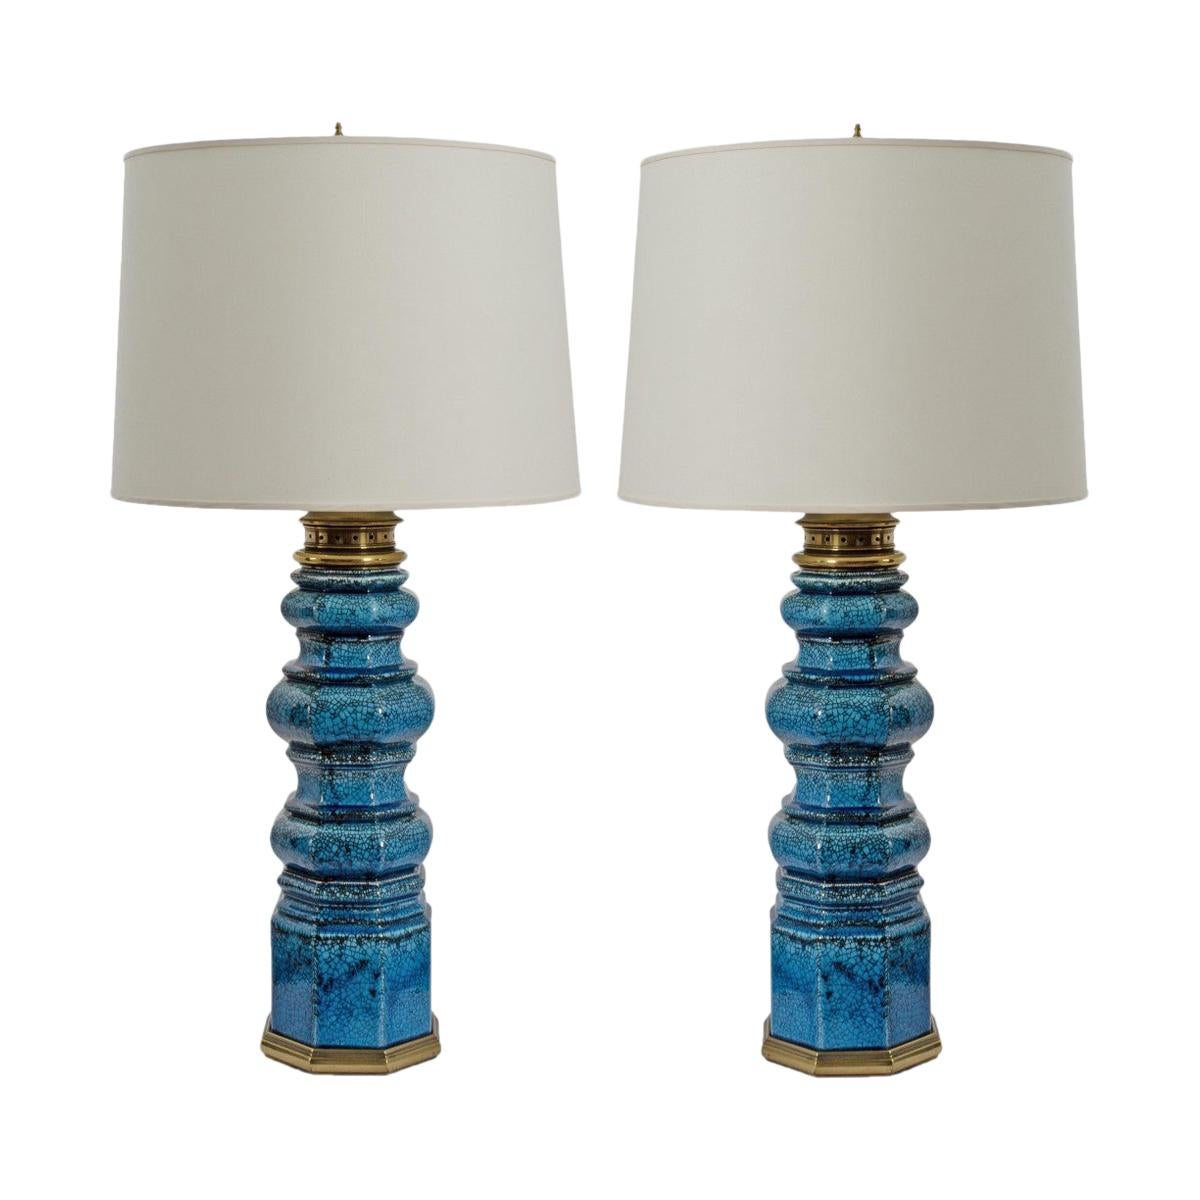 Pair of Stiffel Blue Crackle Glaze Ceramic Pagoda Style Tall Lamps